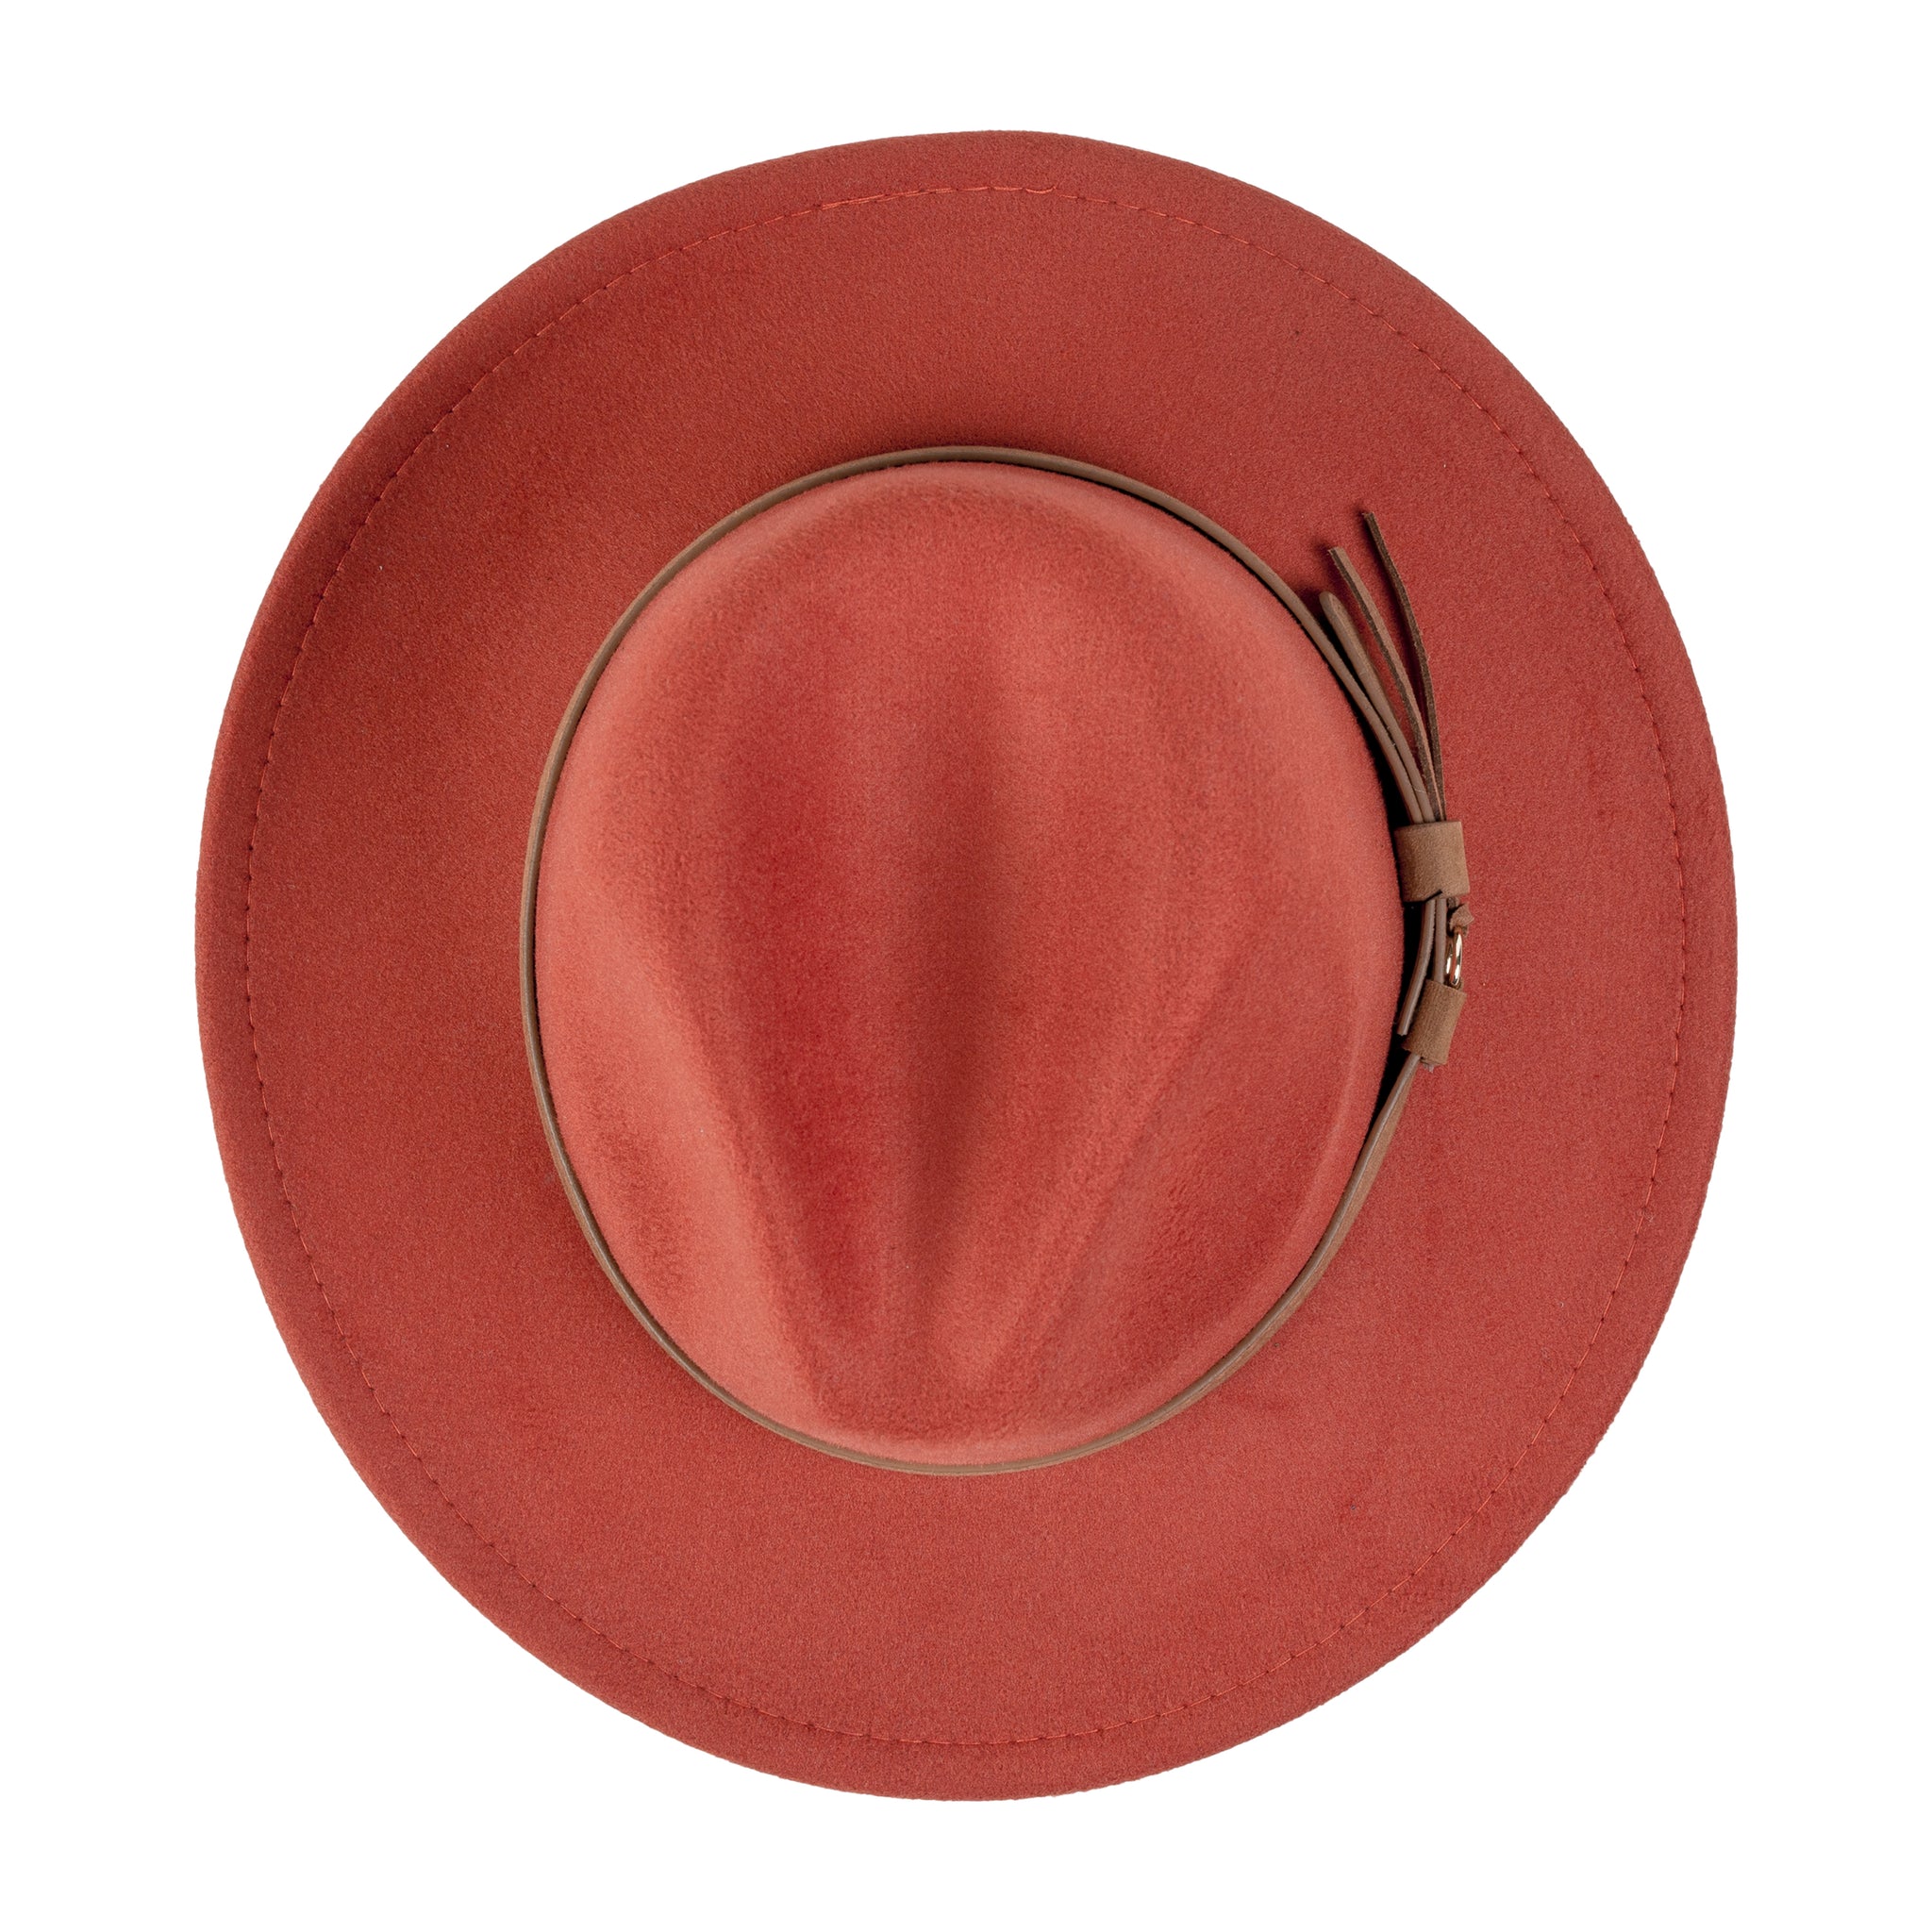 Chokore Pinched Fedora Hat with PU Leather Belt (Caramel)